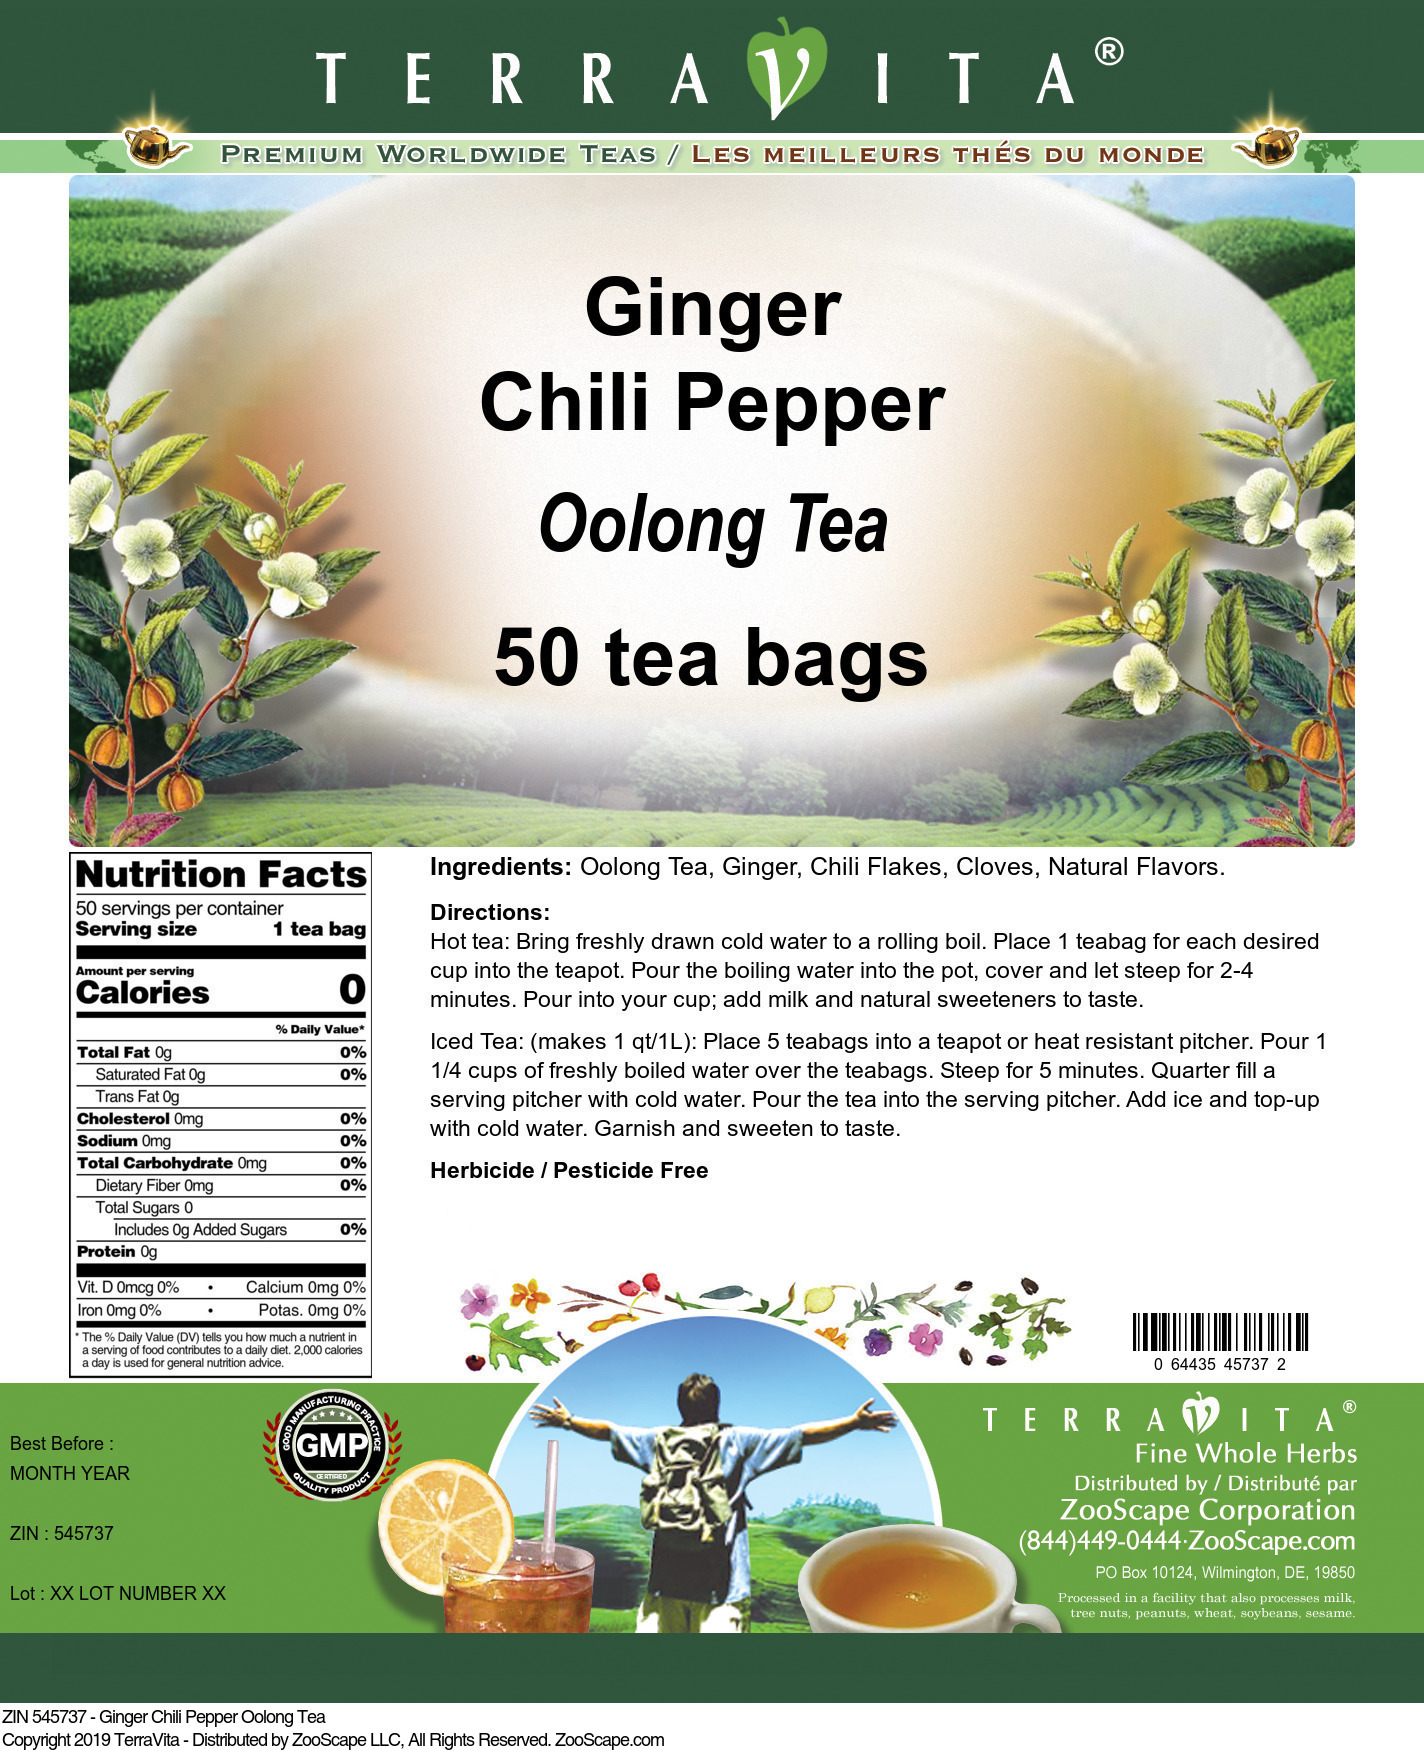 Ginger Chili Pepper Oolong Tea - Label